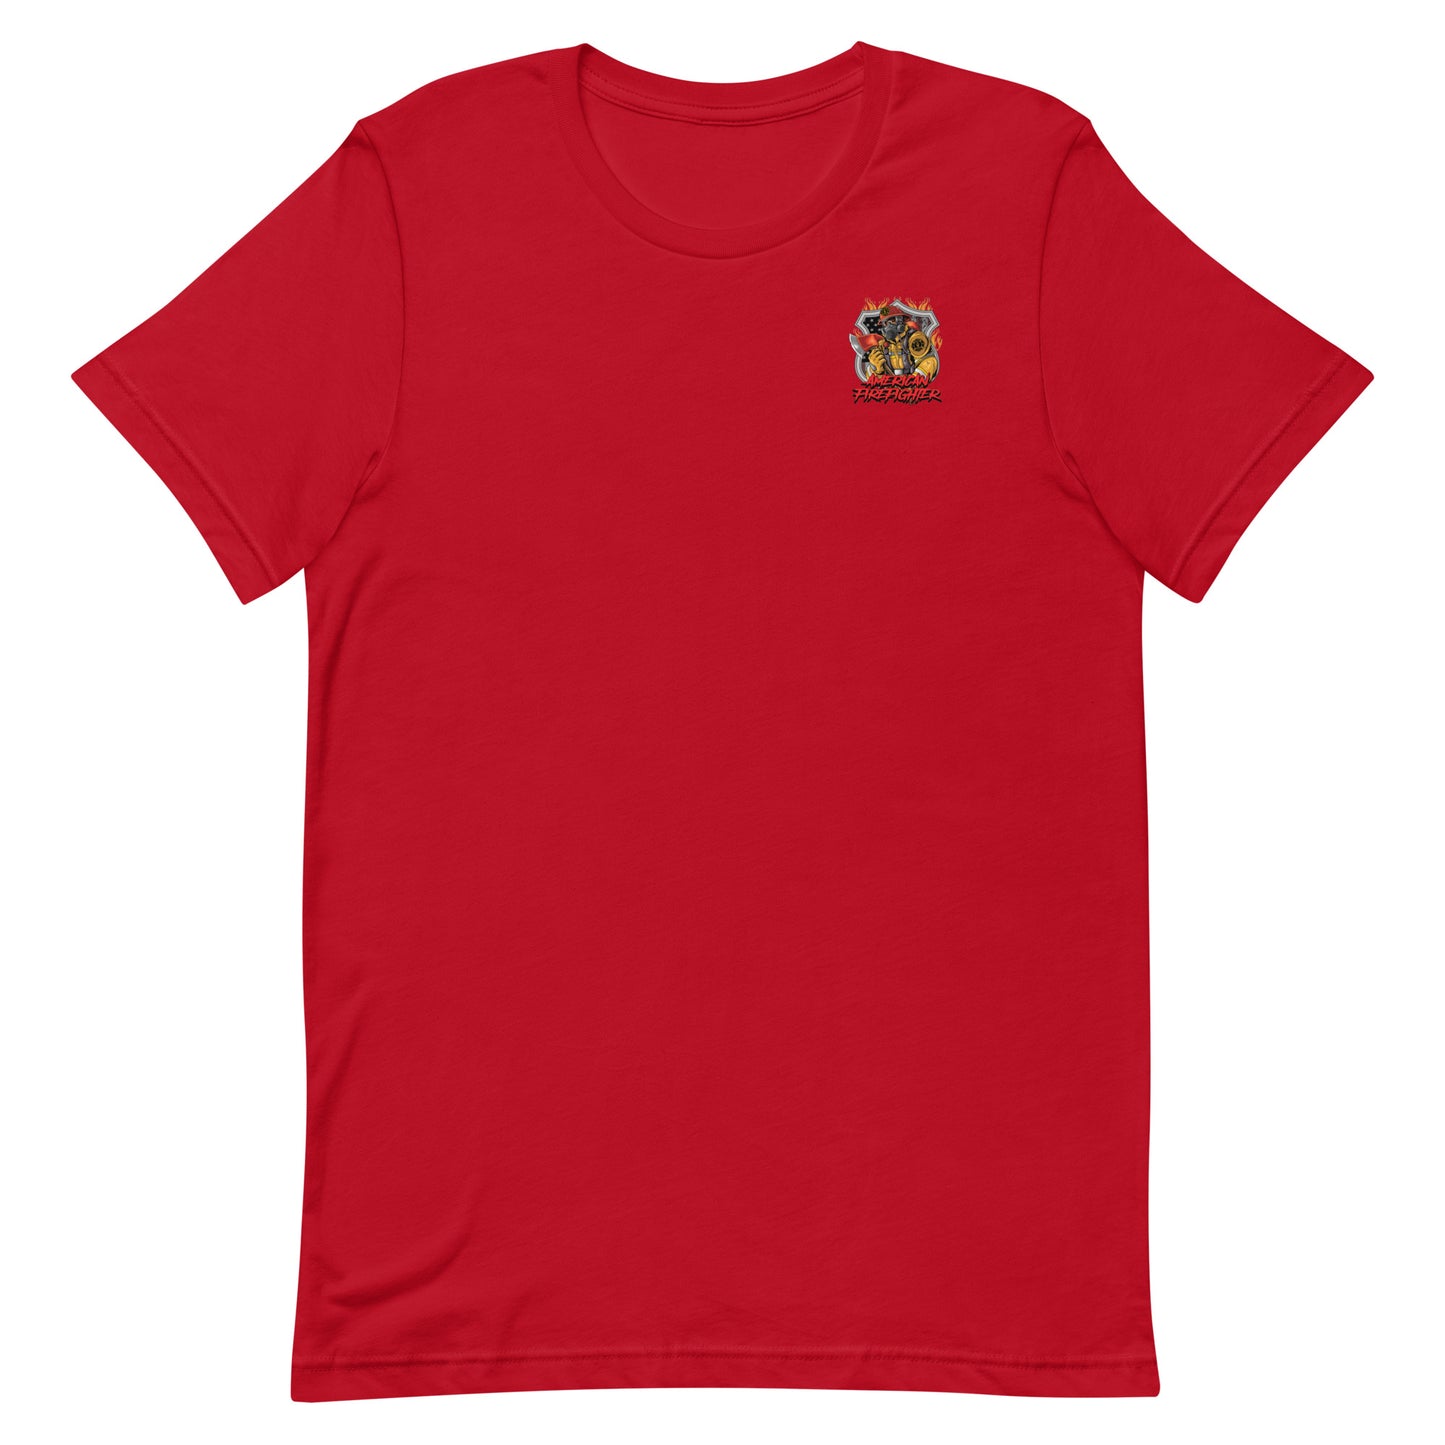 American Firefighter Unisex T Shirt